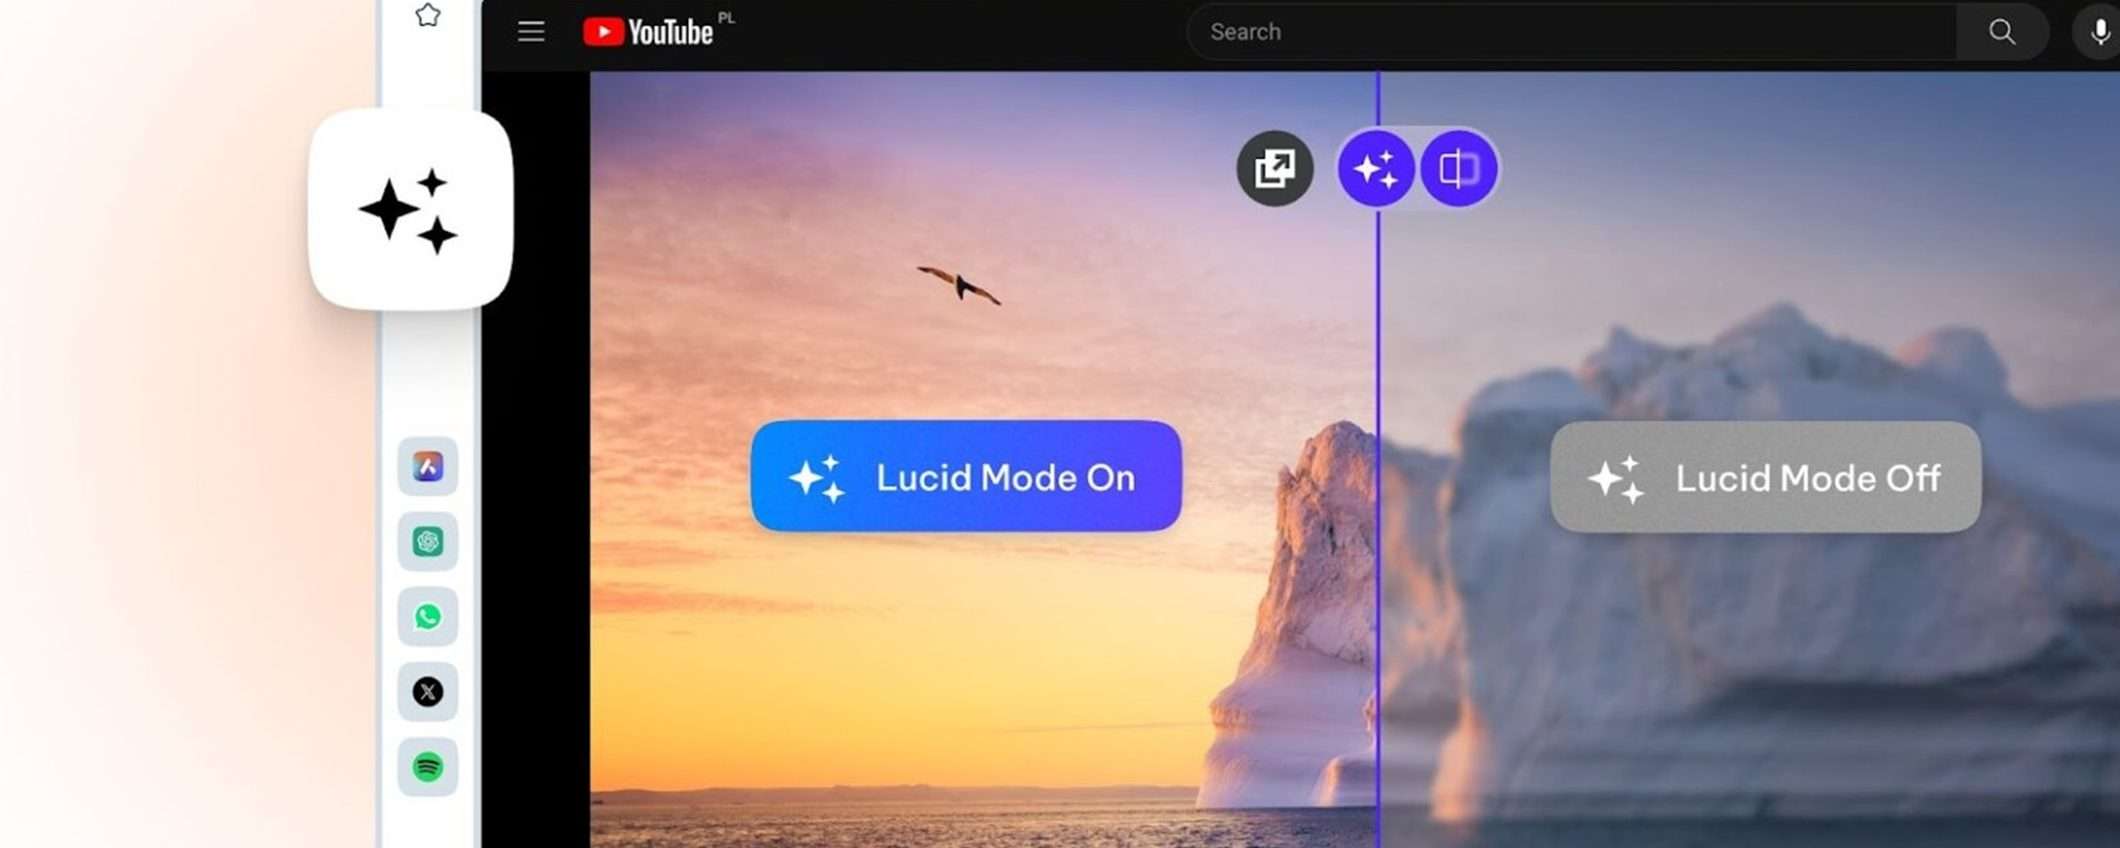 Opera introduce Lucid Mode 2.0 con controlli migliorati